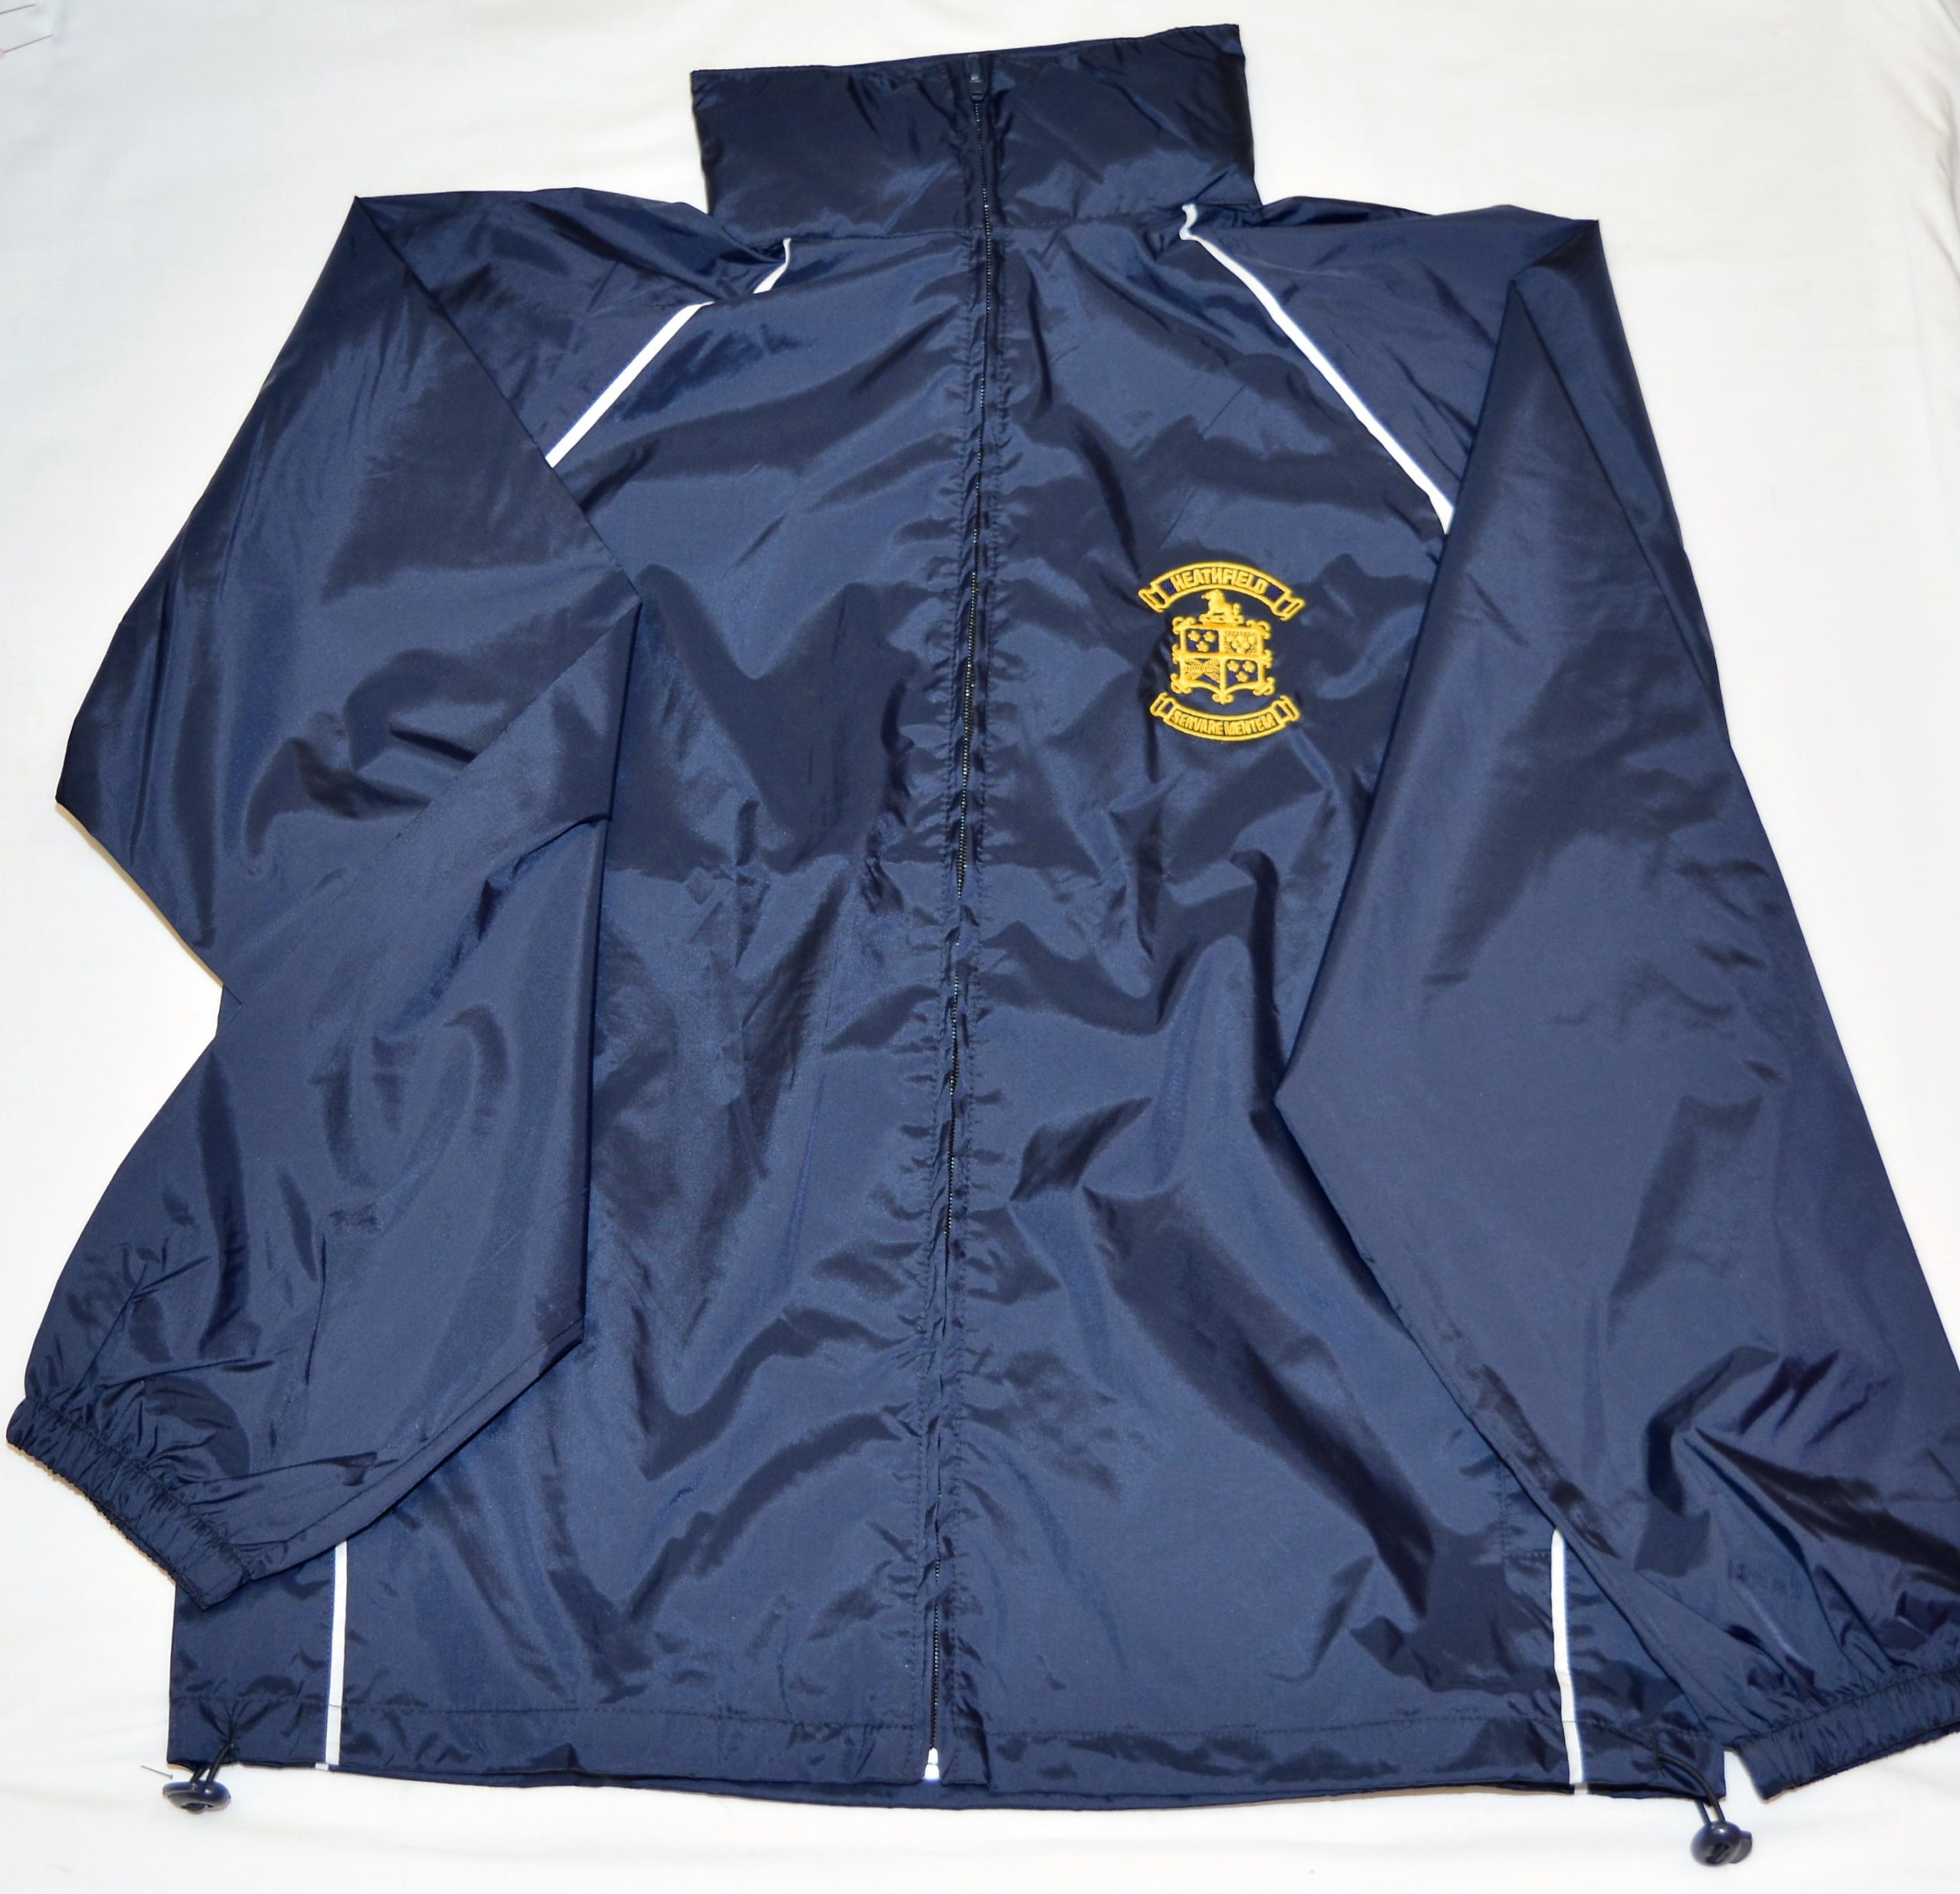 Shower Proof Jacket With School Crest - DANCERS